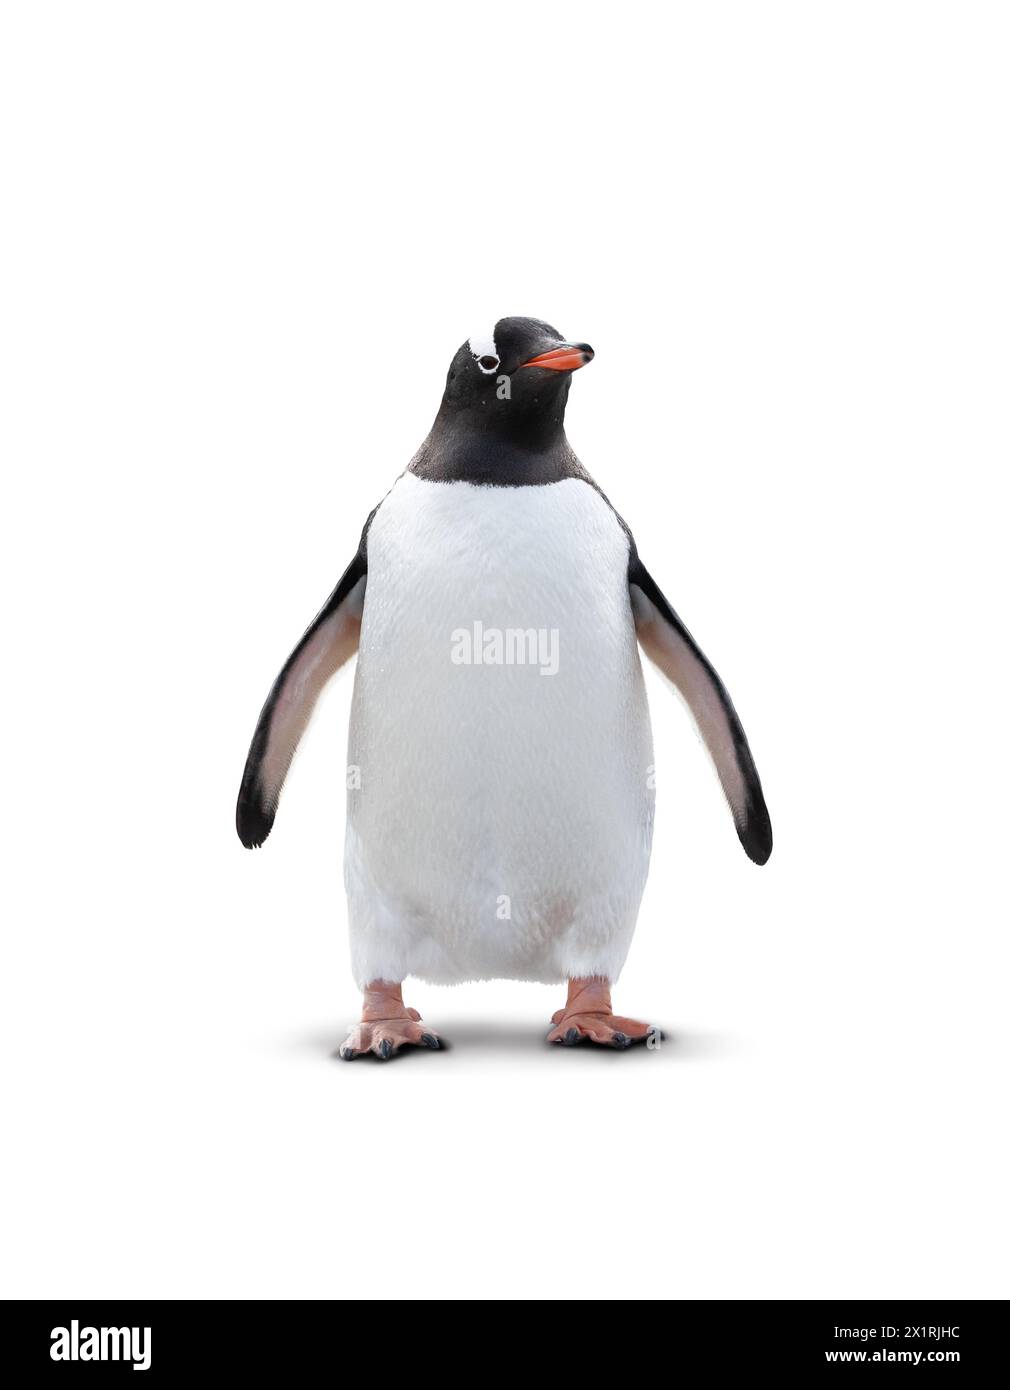 Pinguino Gentoo isolato su sfondo bianco. Foto Stock